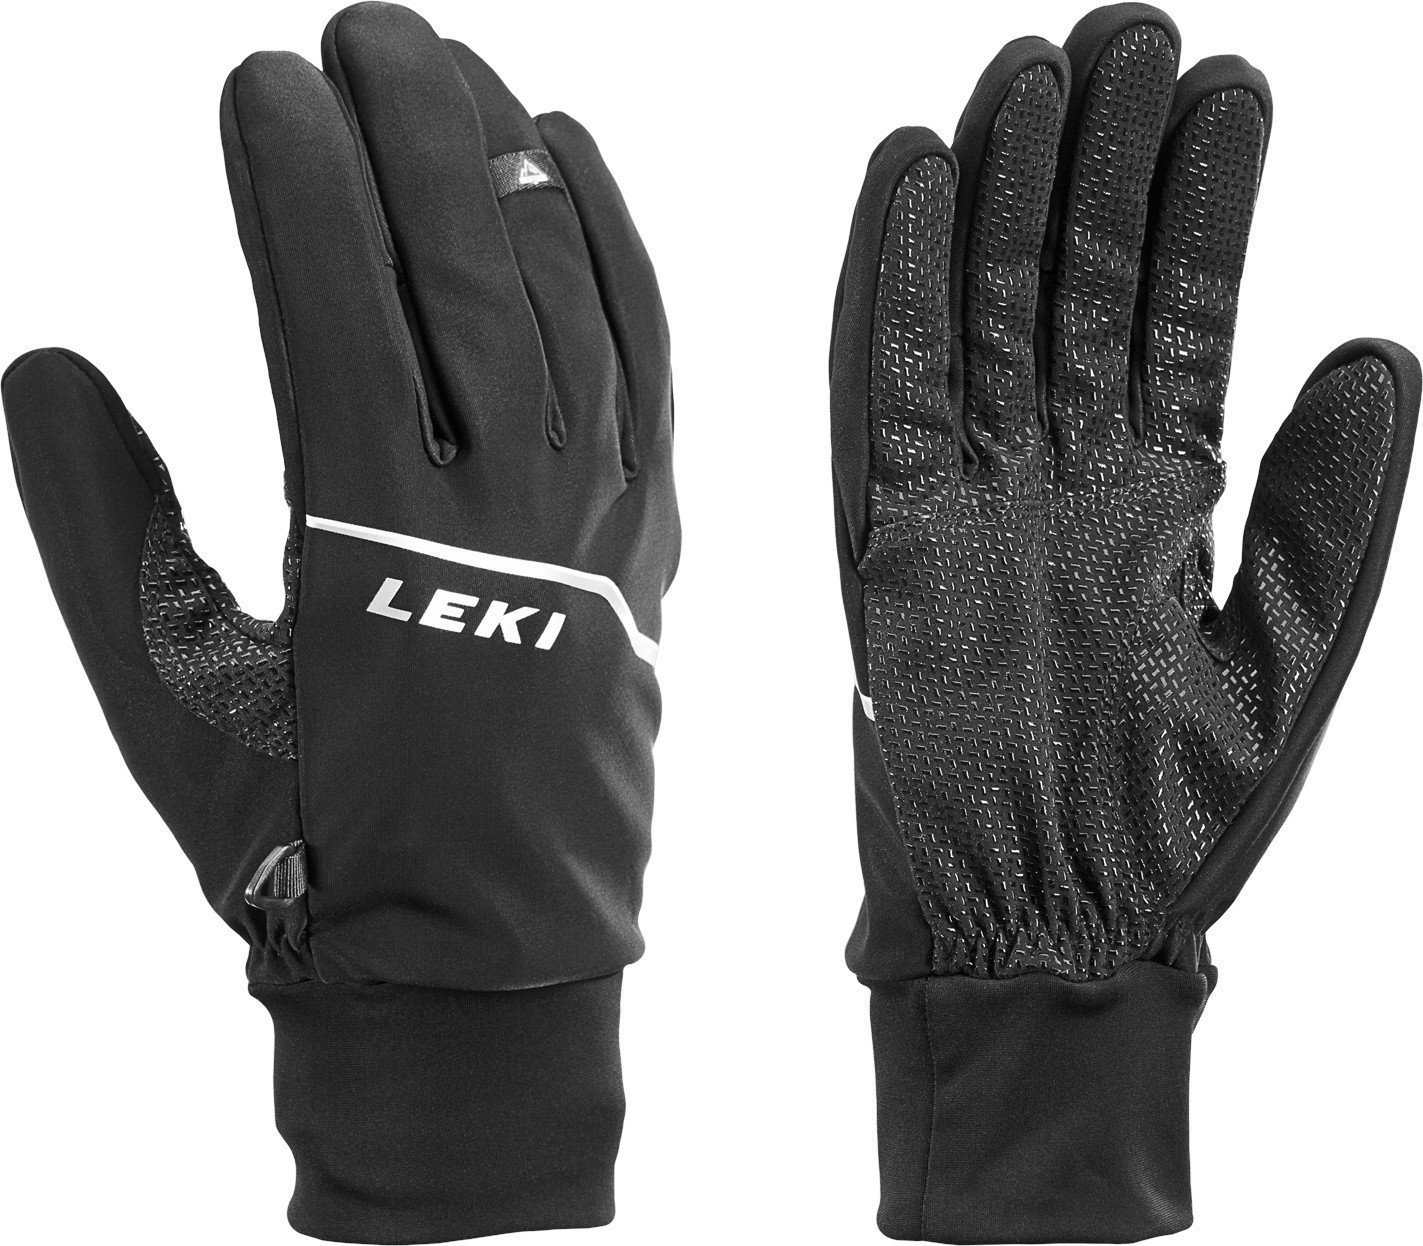 Handschuhe Leki Tour Lite Black/Chrome/White 8,5 Handschuhe